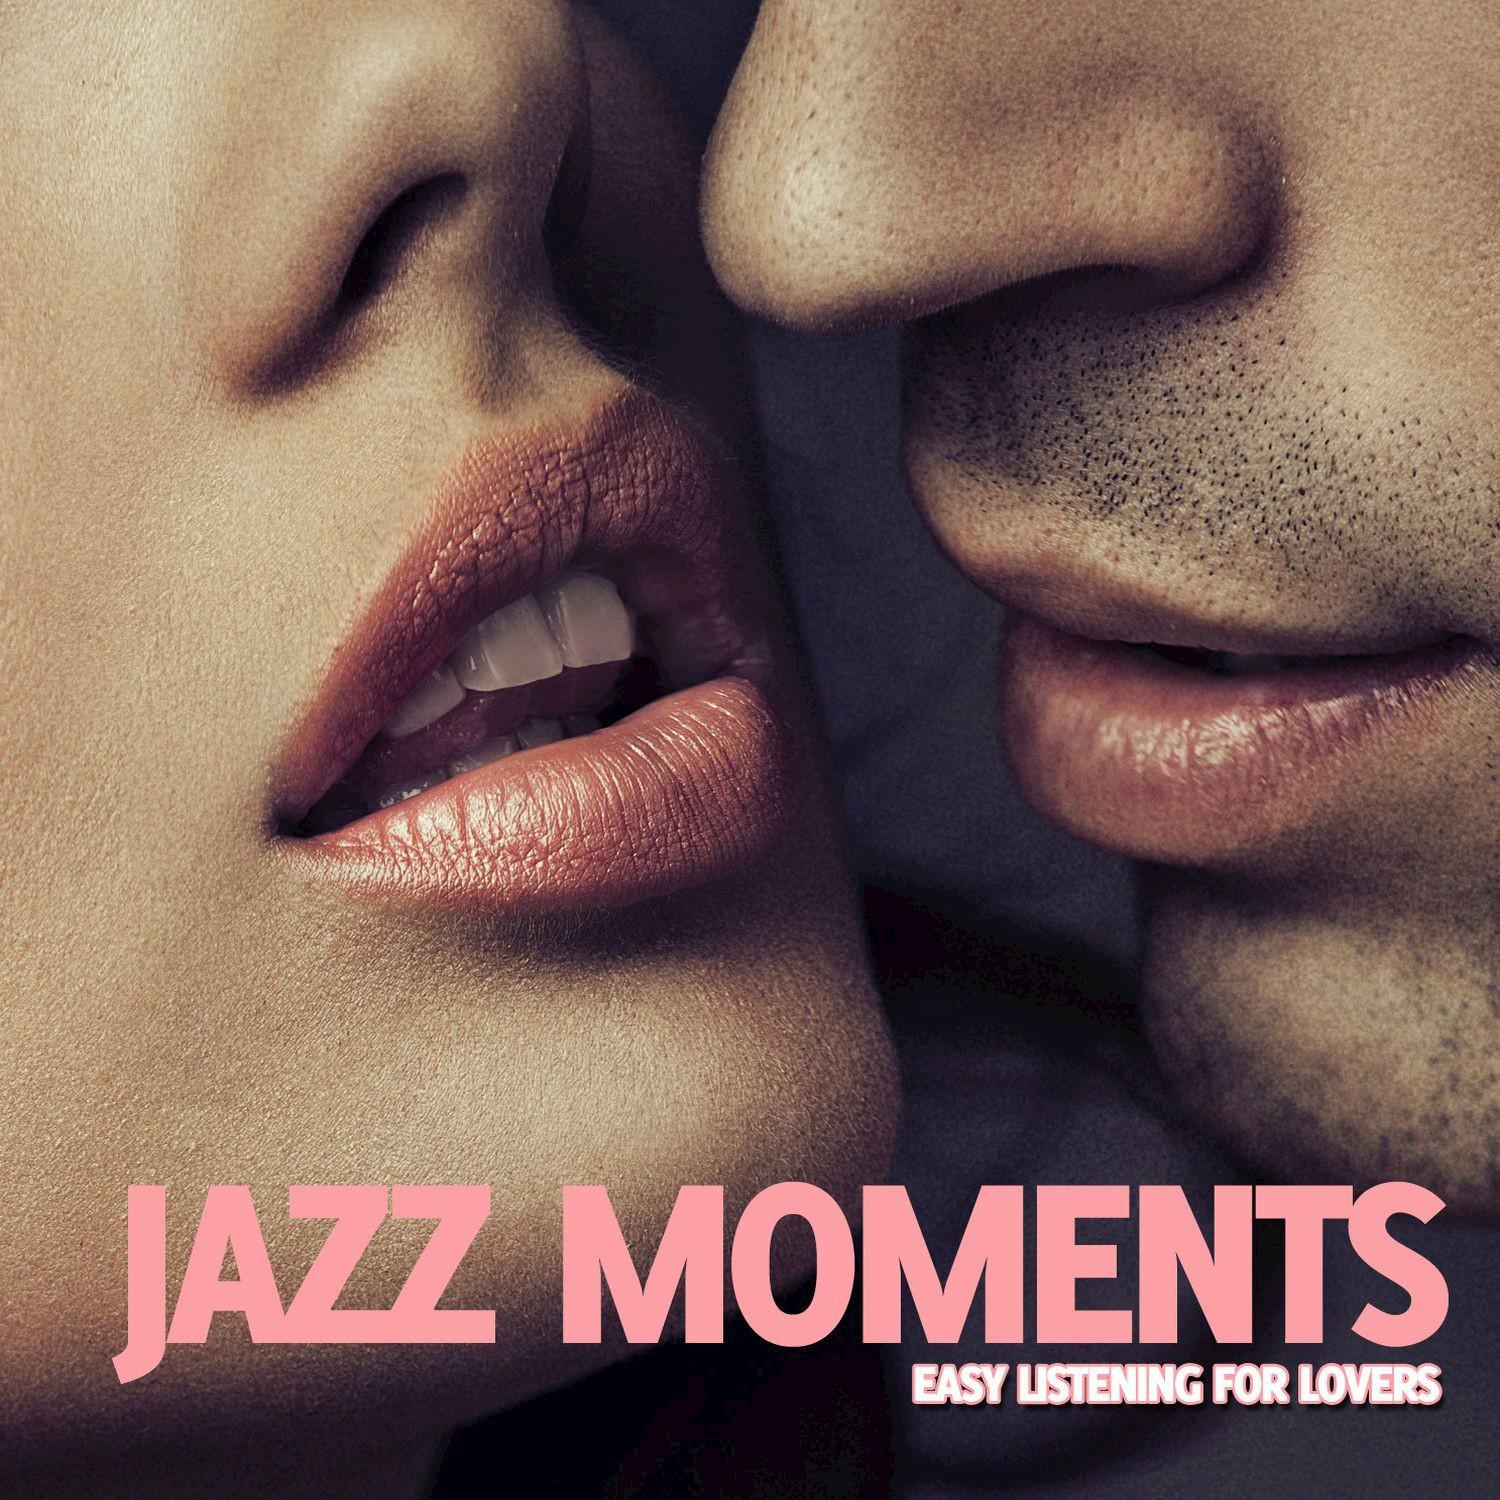 Jazz Moments Vol. 1